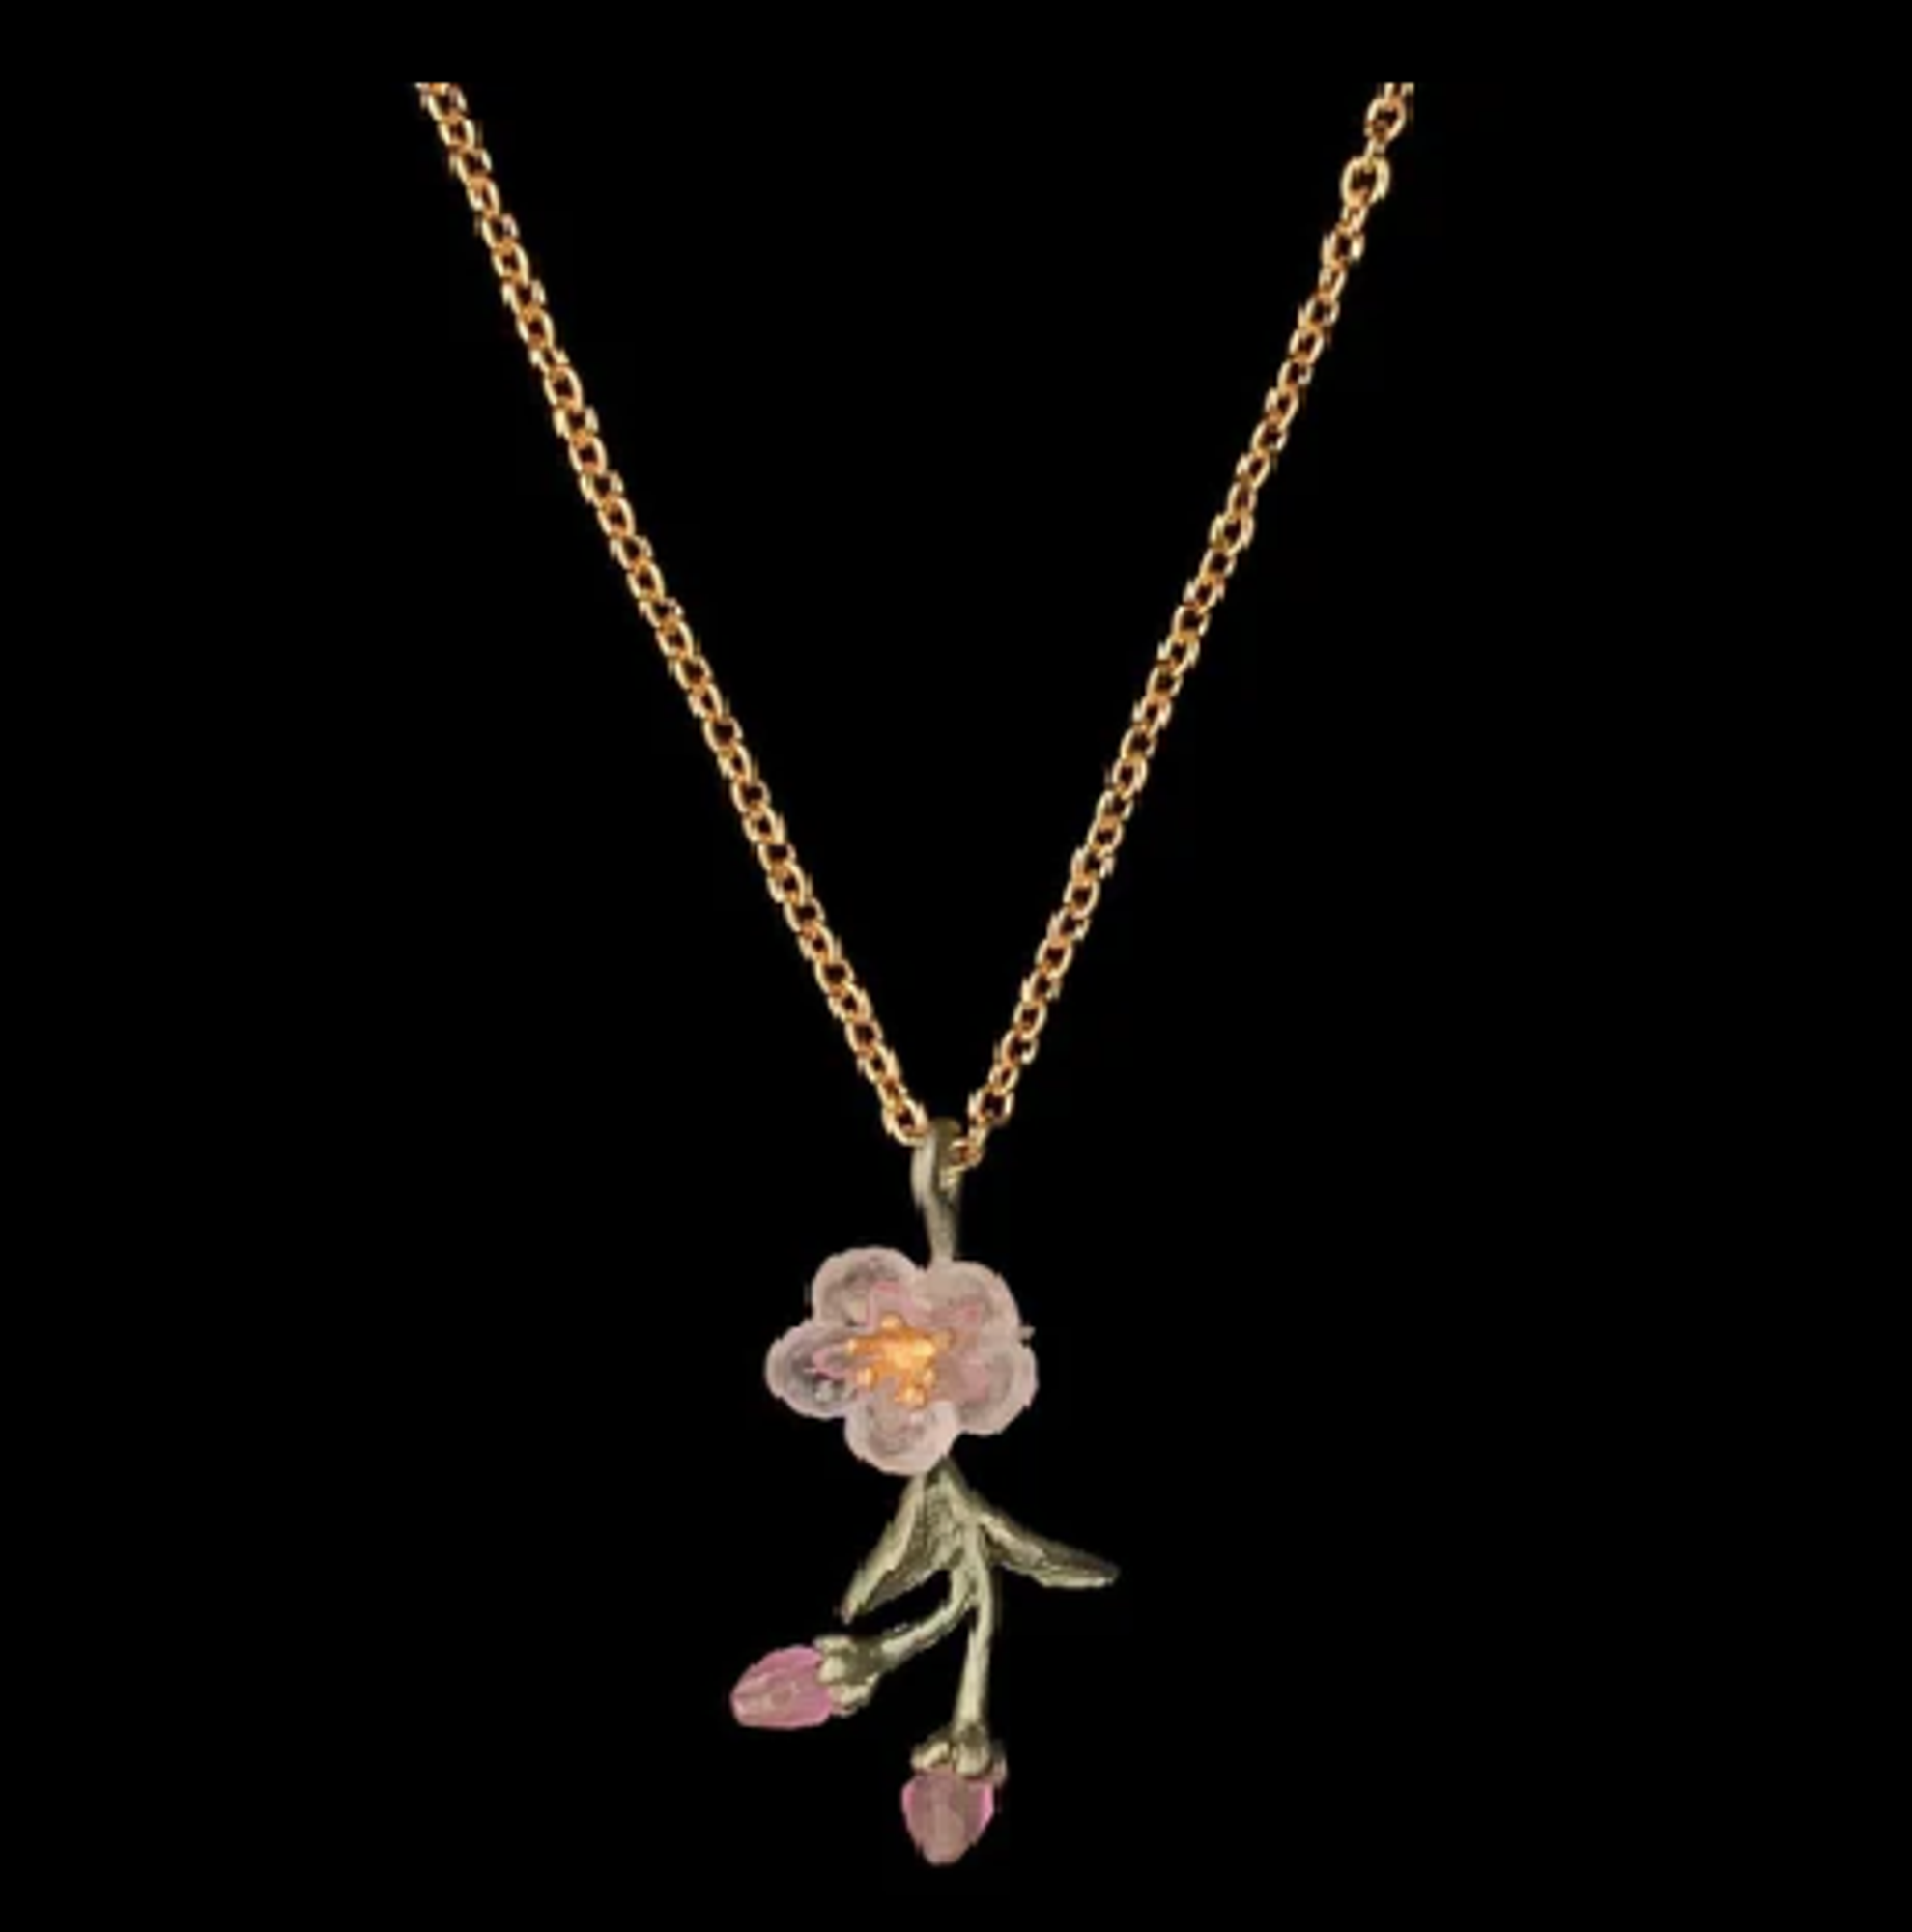 Cherry blossom necklace – Loca Travesuras